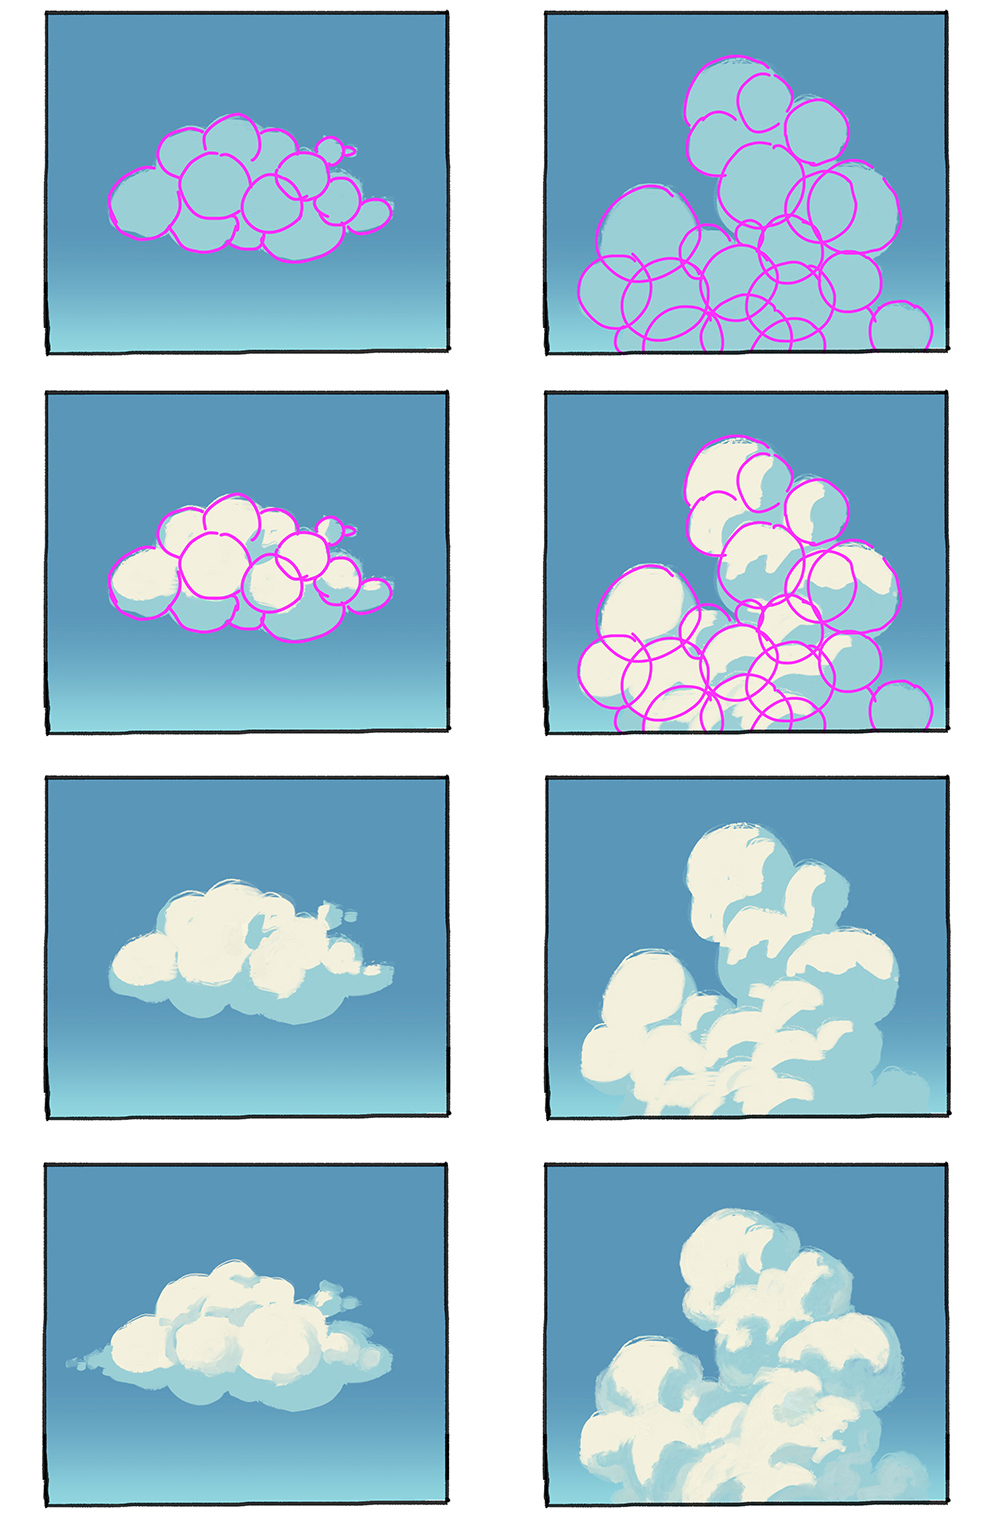 Clouds And Sky Sketch Illustration 22337664 - Megapixl